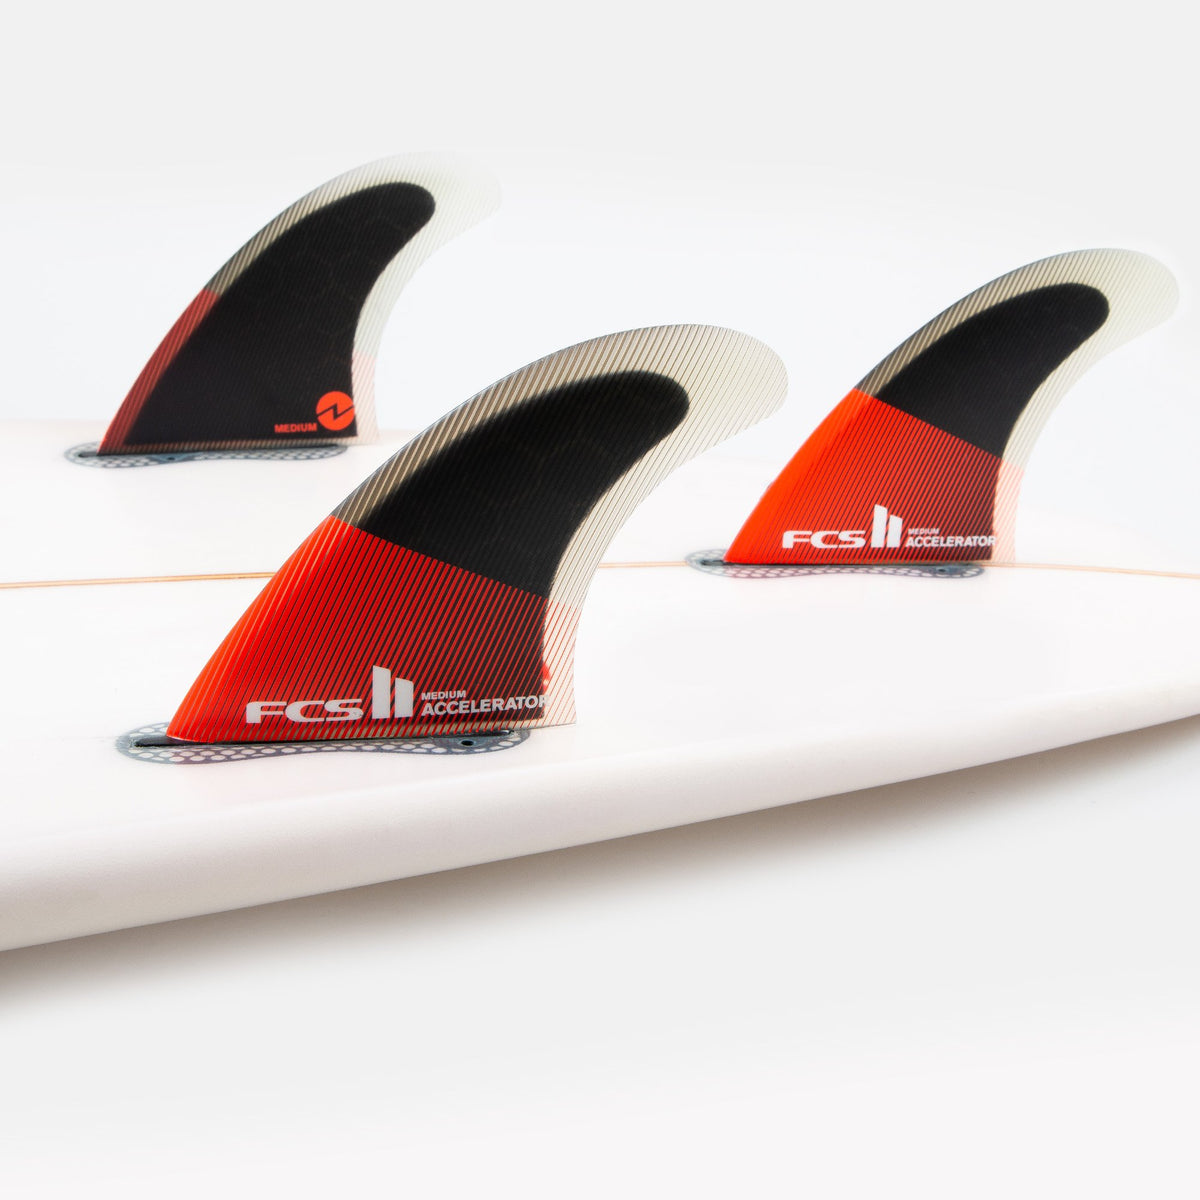 FCS-II-accelerator-large-surfboard-thurster-medium-fins-red-PC-blacksheepsurf-ireland